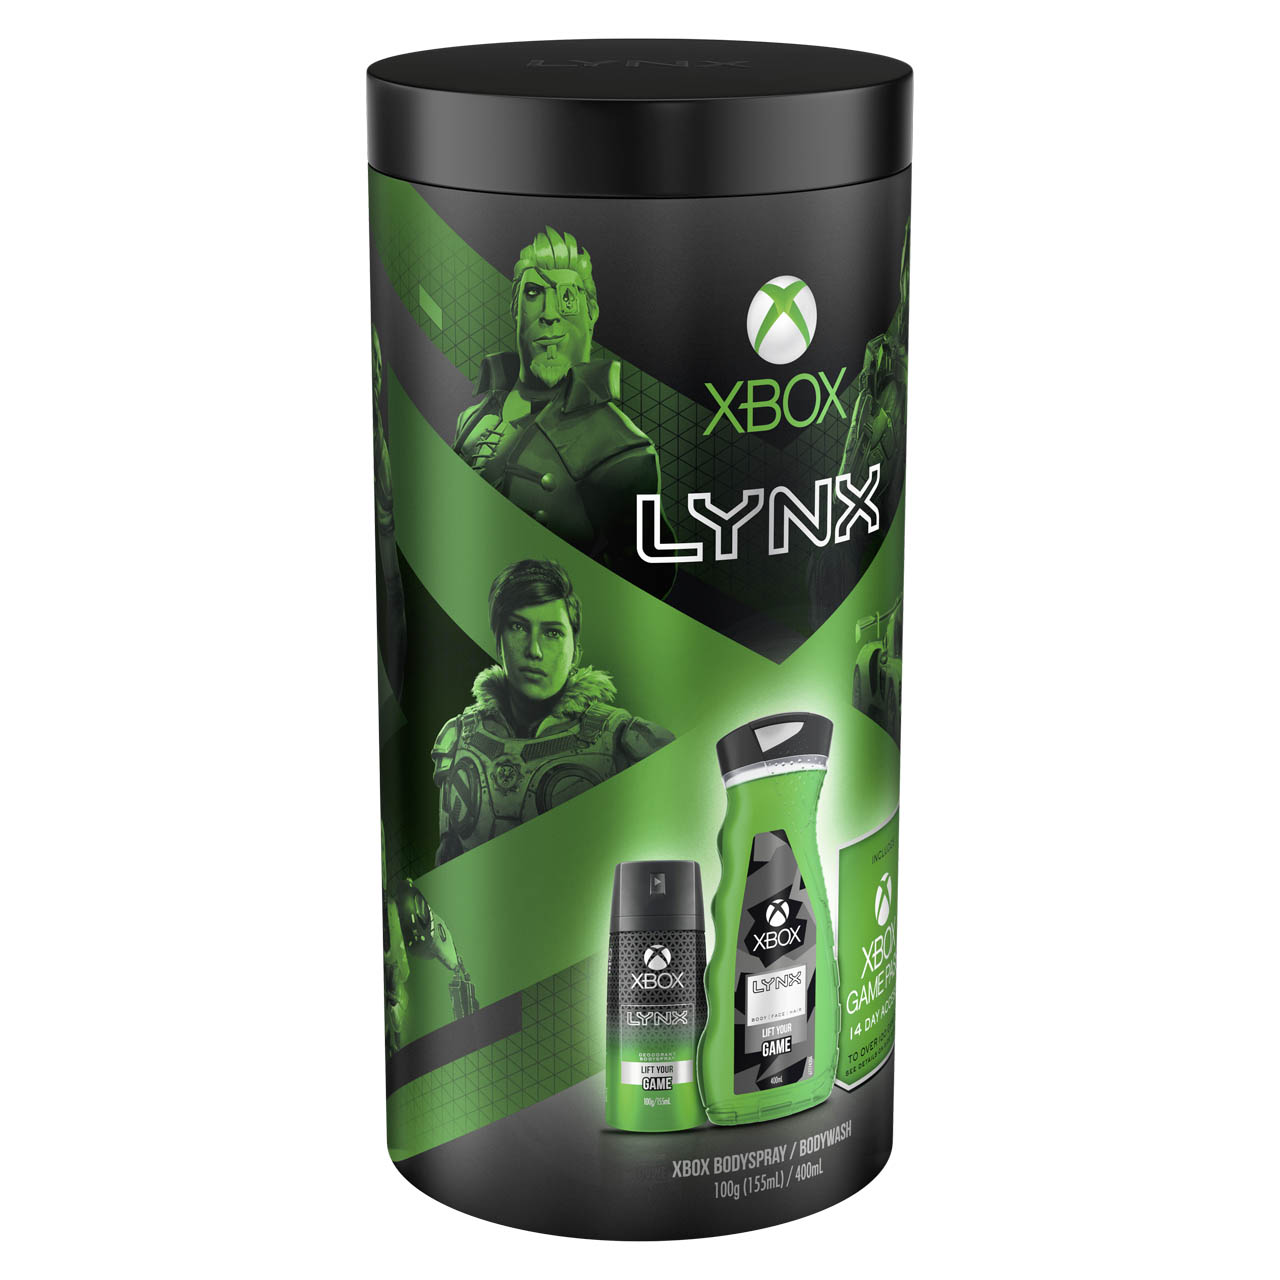 Xbox and Lynx eSports